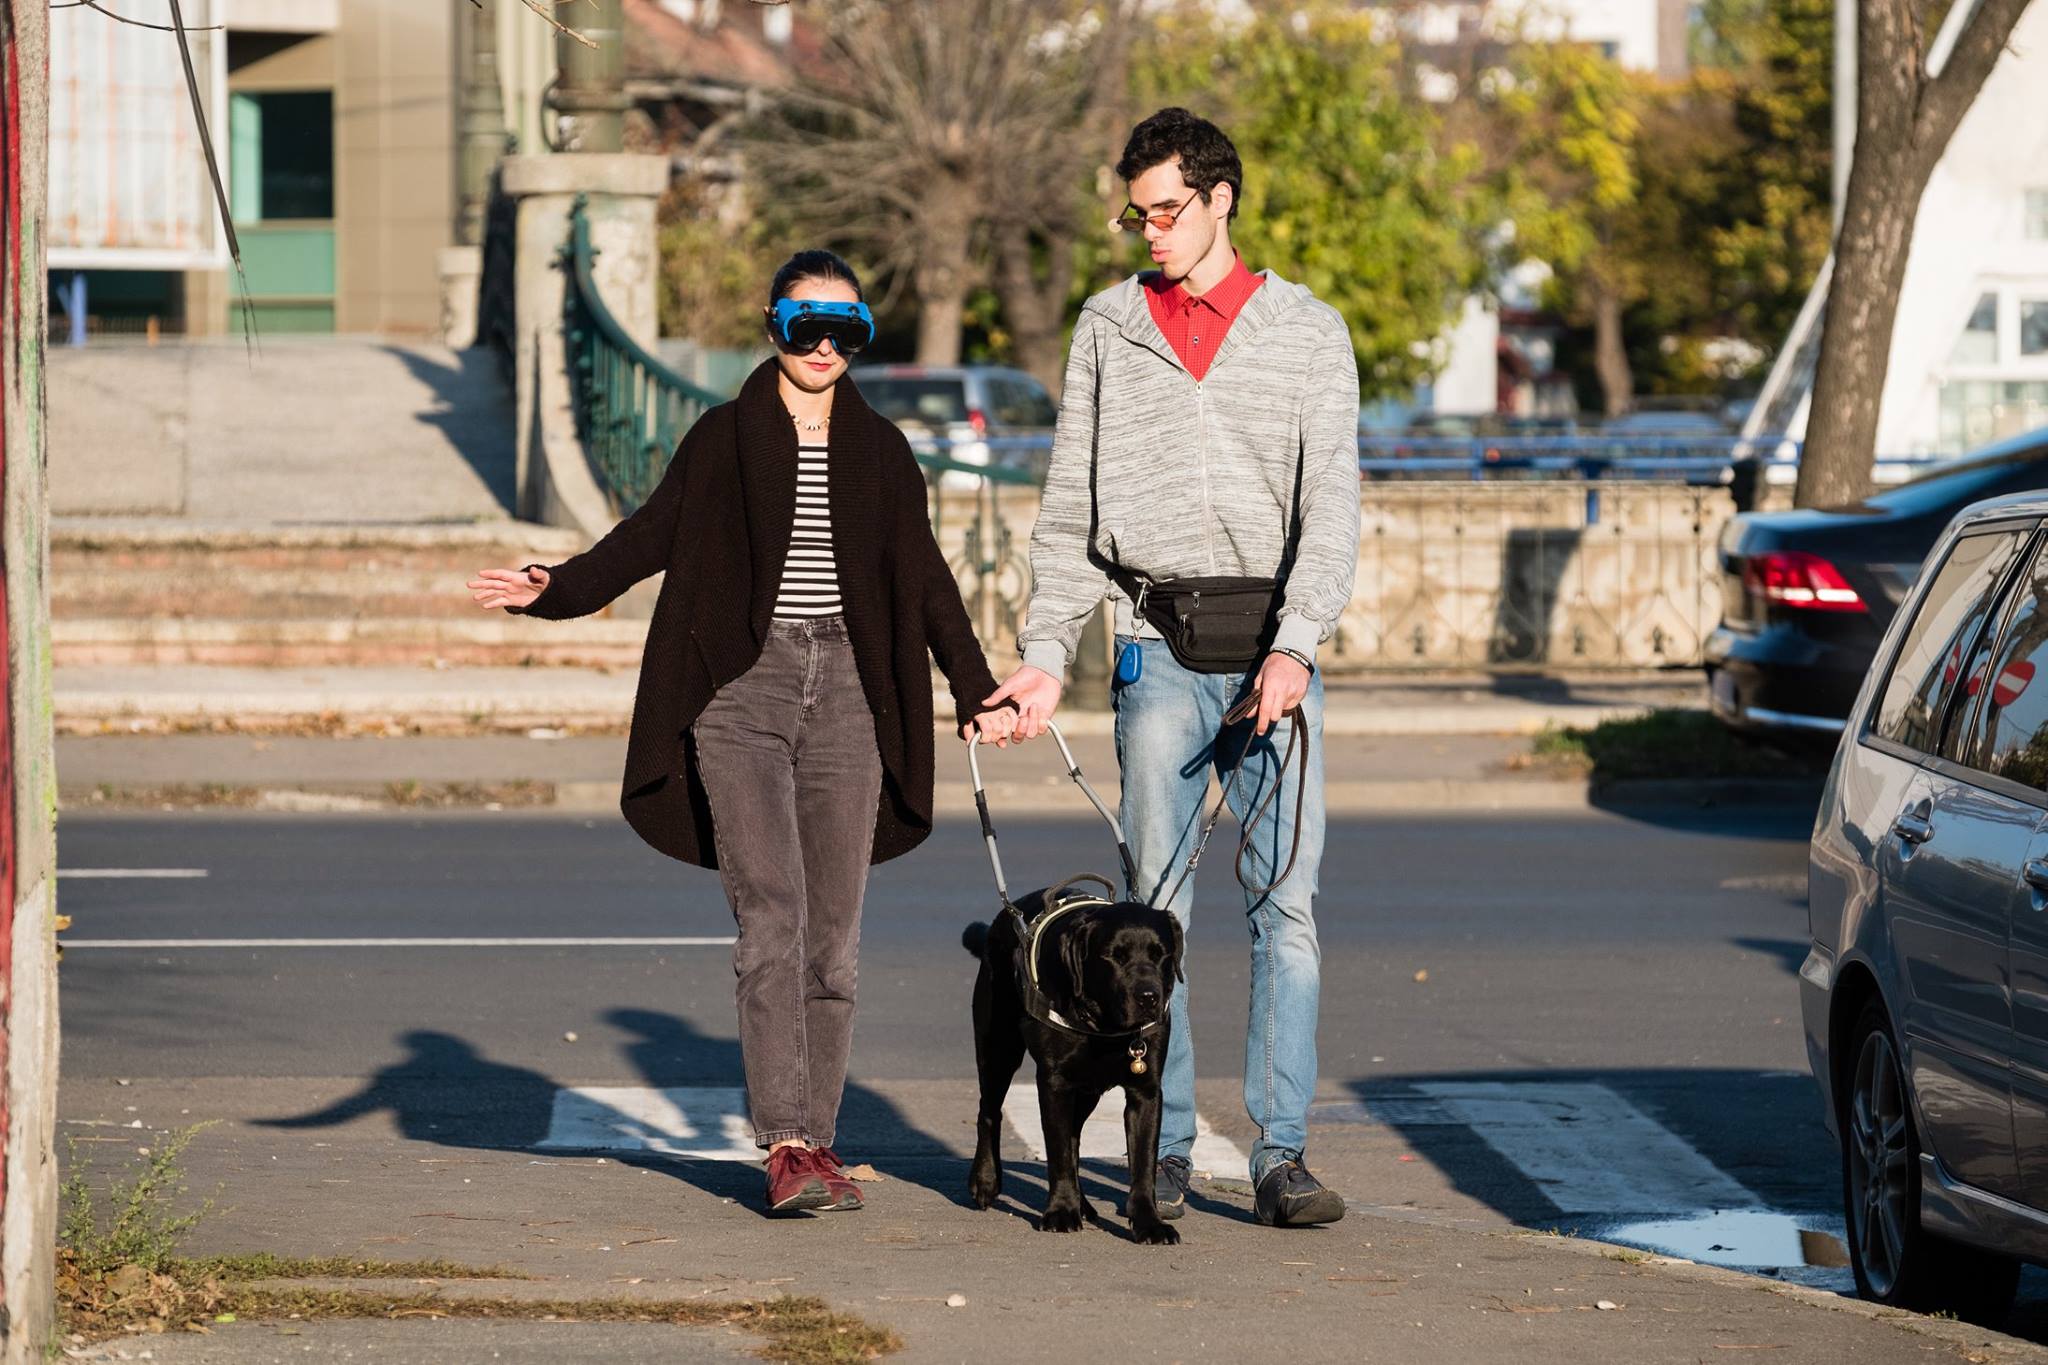 Descriere foto: Phantom pe strada ghideaza un participant cu ochelari, impreuna cu Paul. 